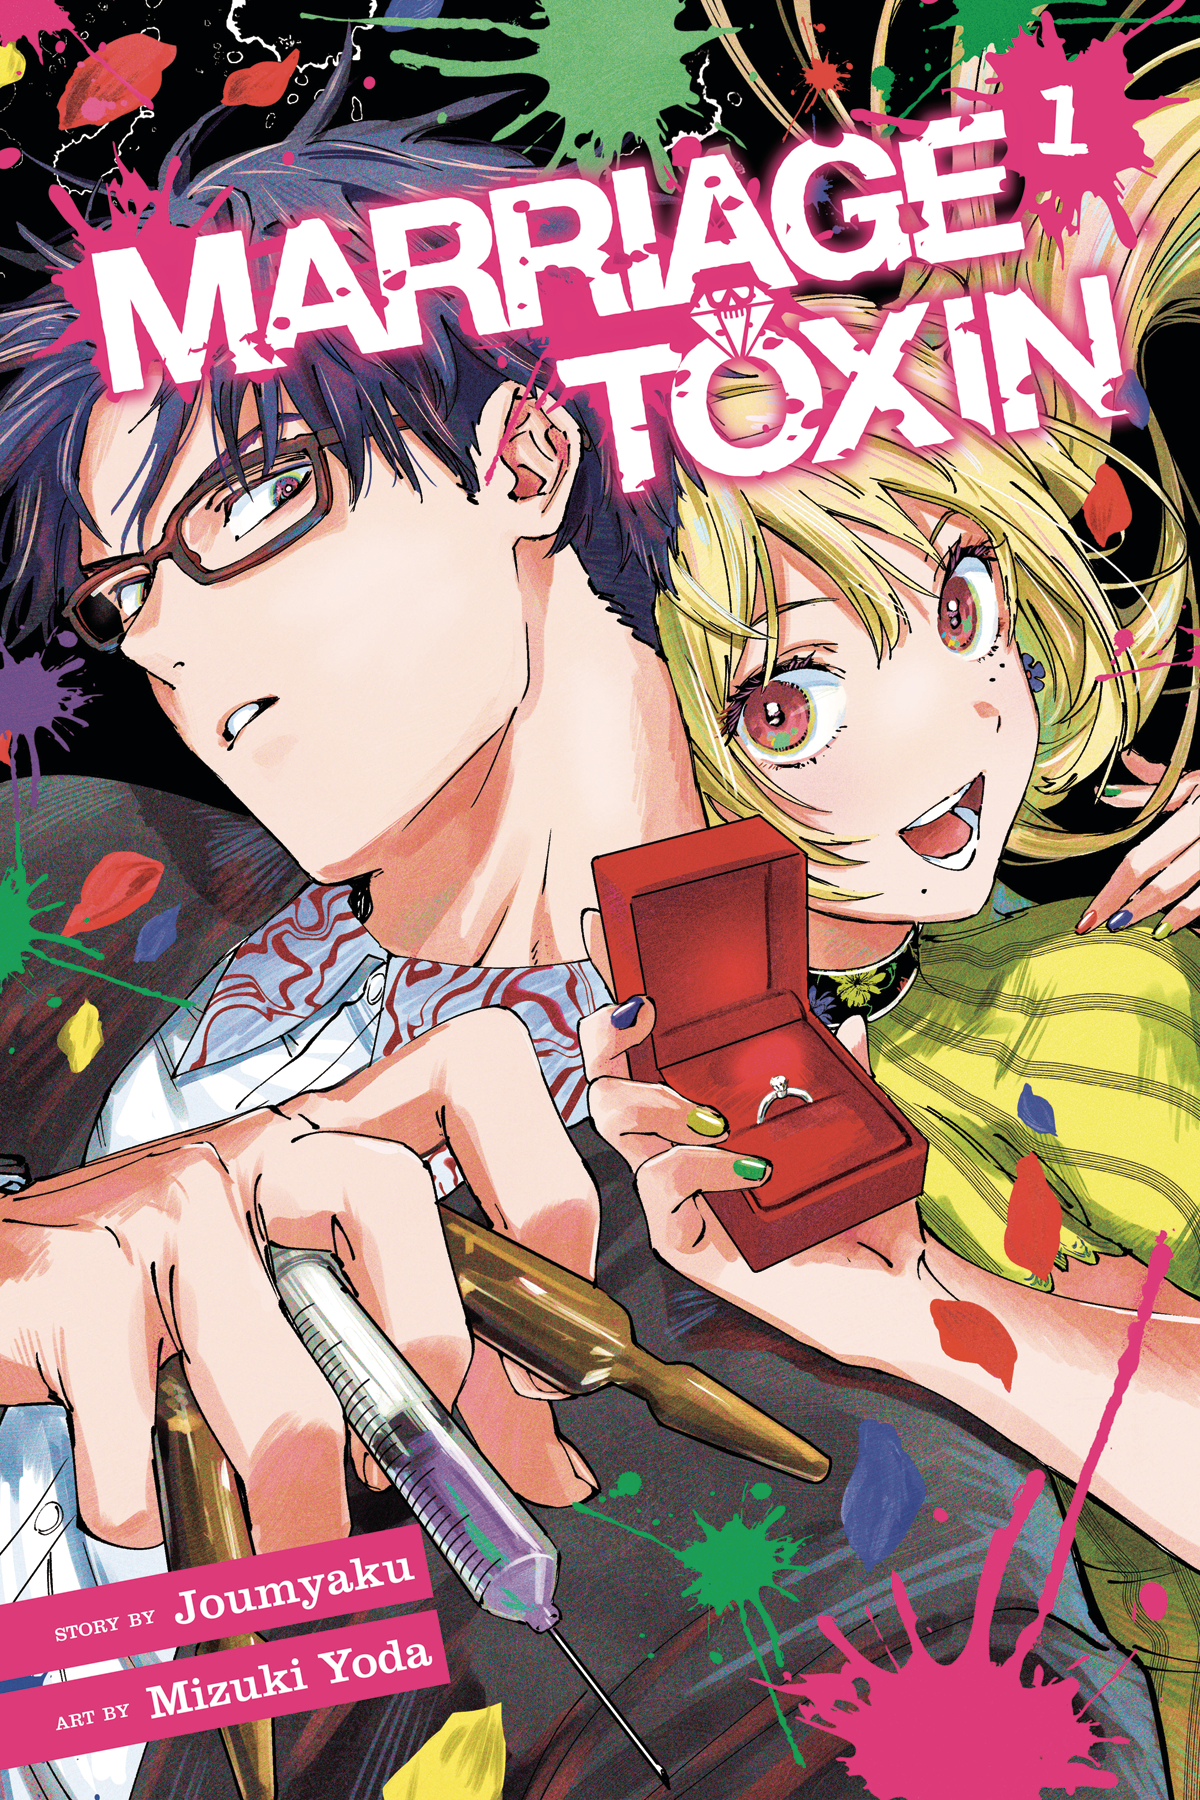 Marriage Toxin Manga Volume 1